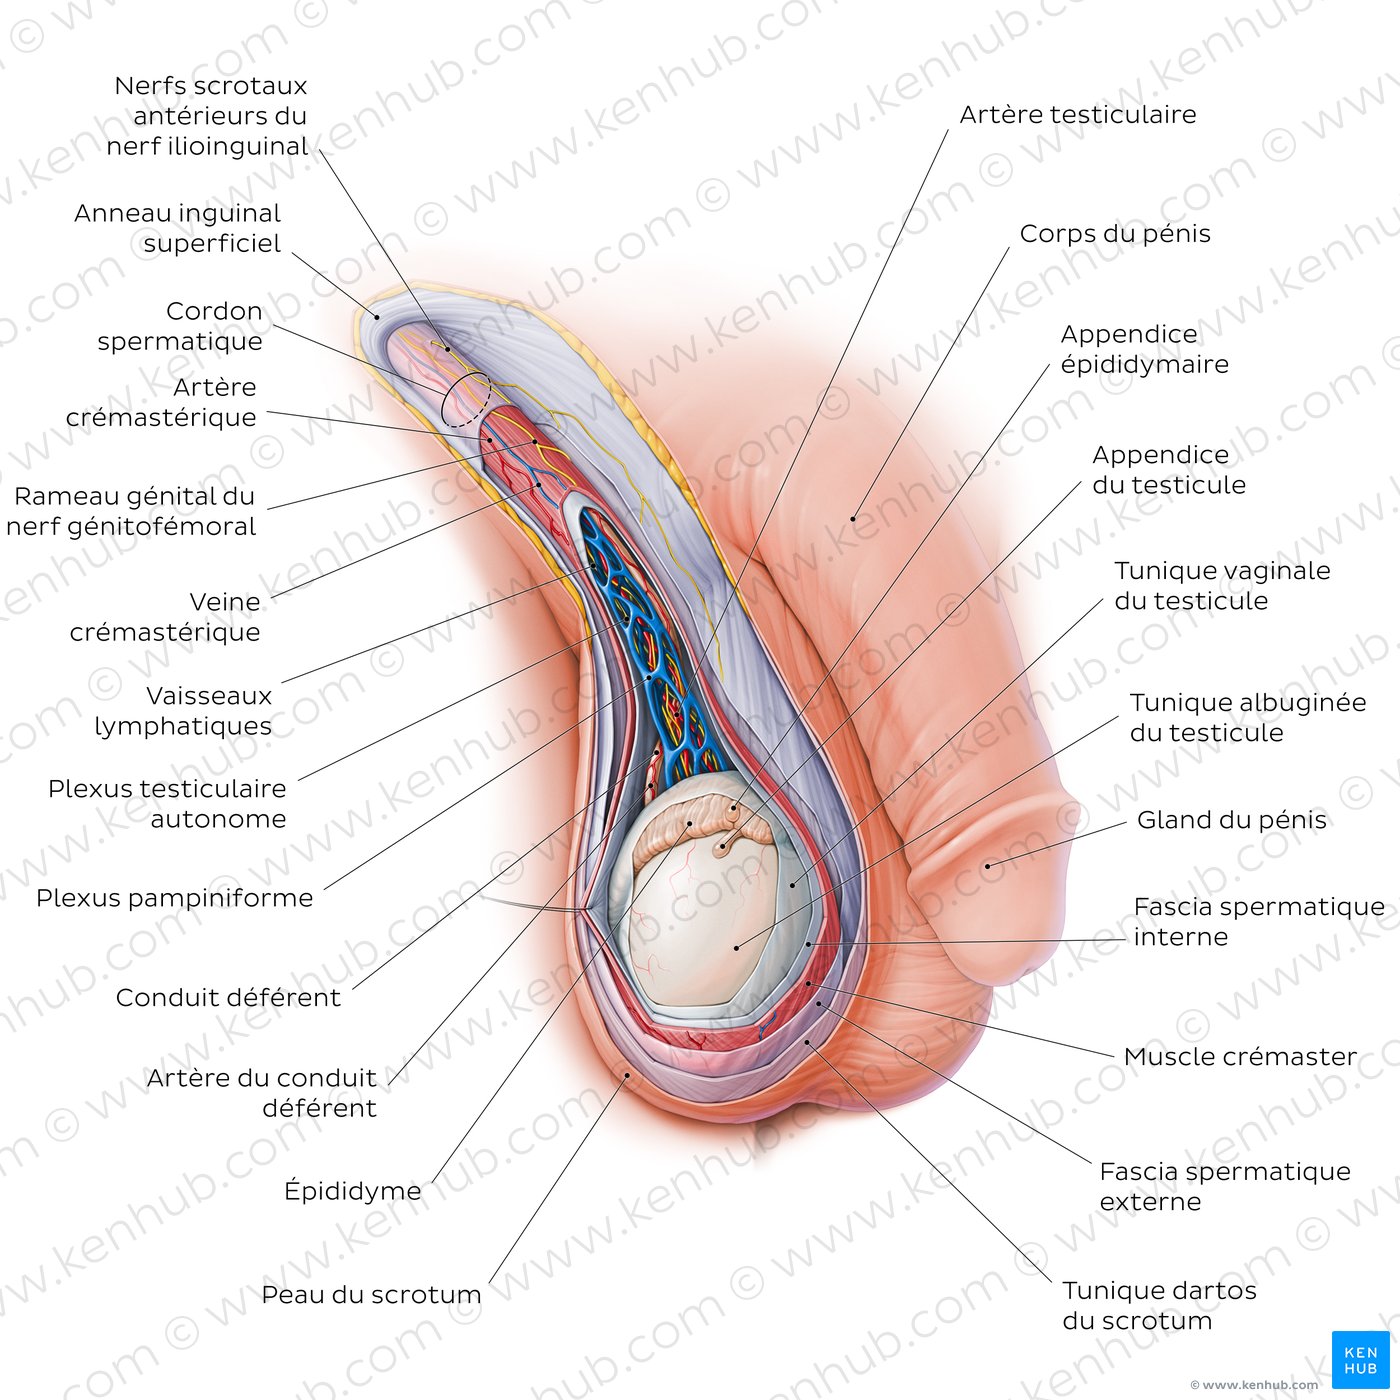 Contenu du scrotum et du cordon spermatique